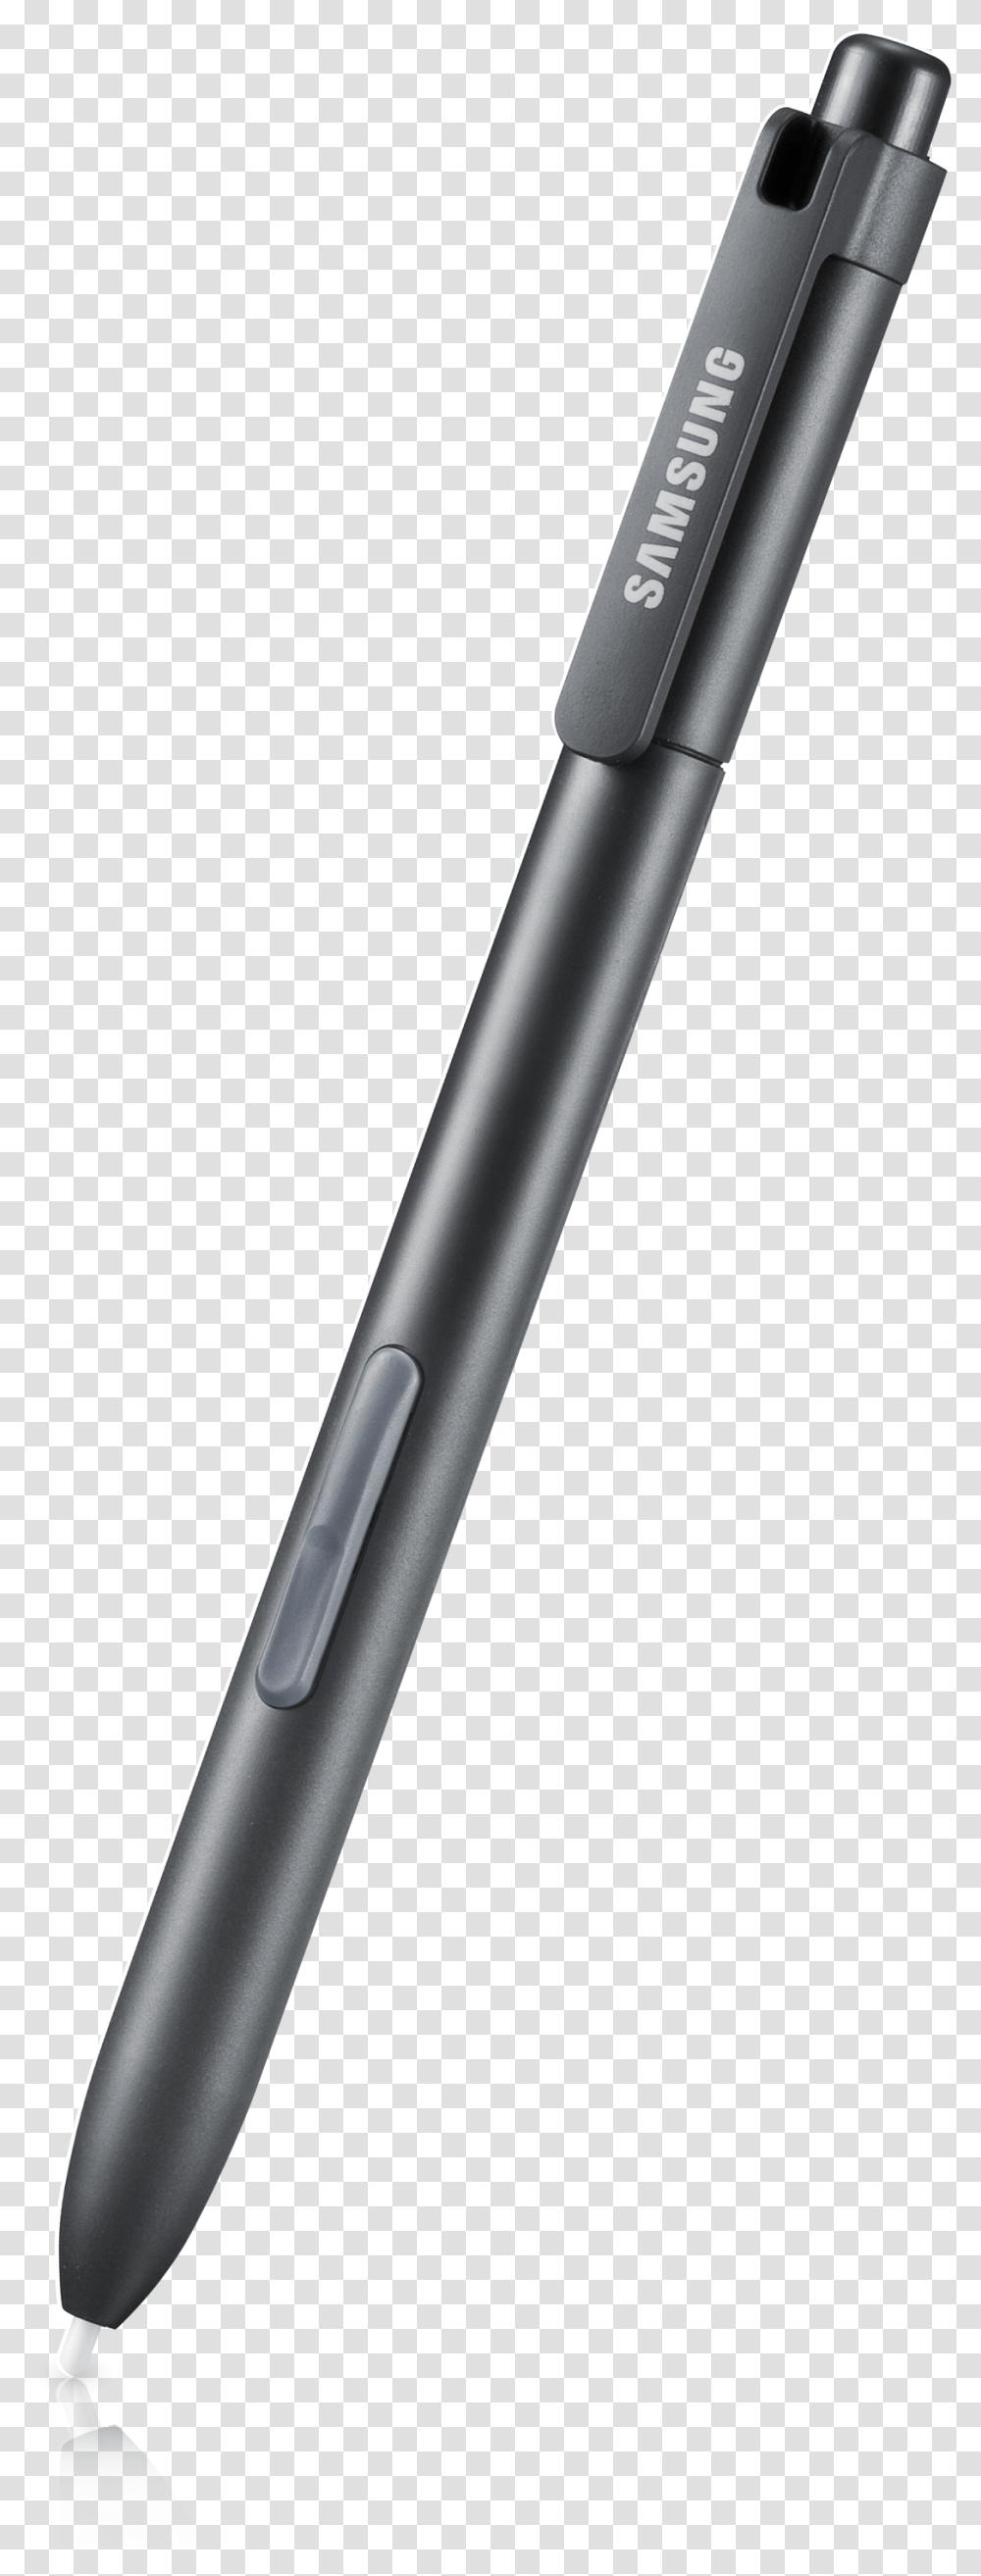 Galaxy Note 101 S Pen Samsung Support Hken Penna Moleskine, Electronics, Brush, Tool, Baseball Bat Transparent Png